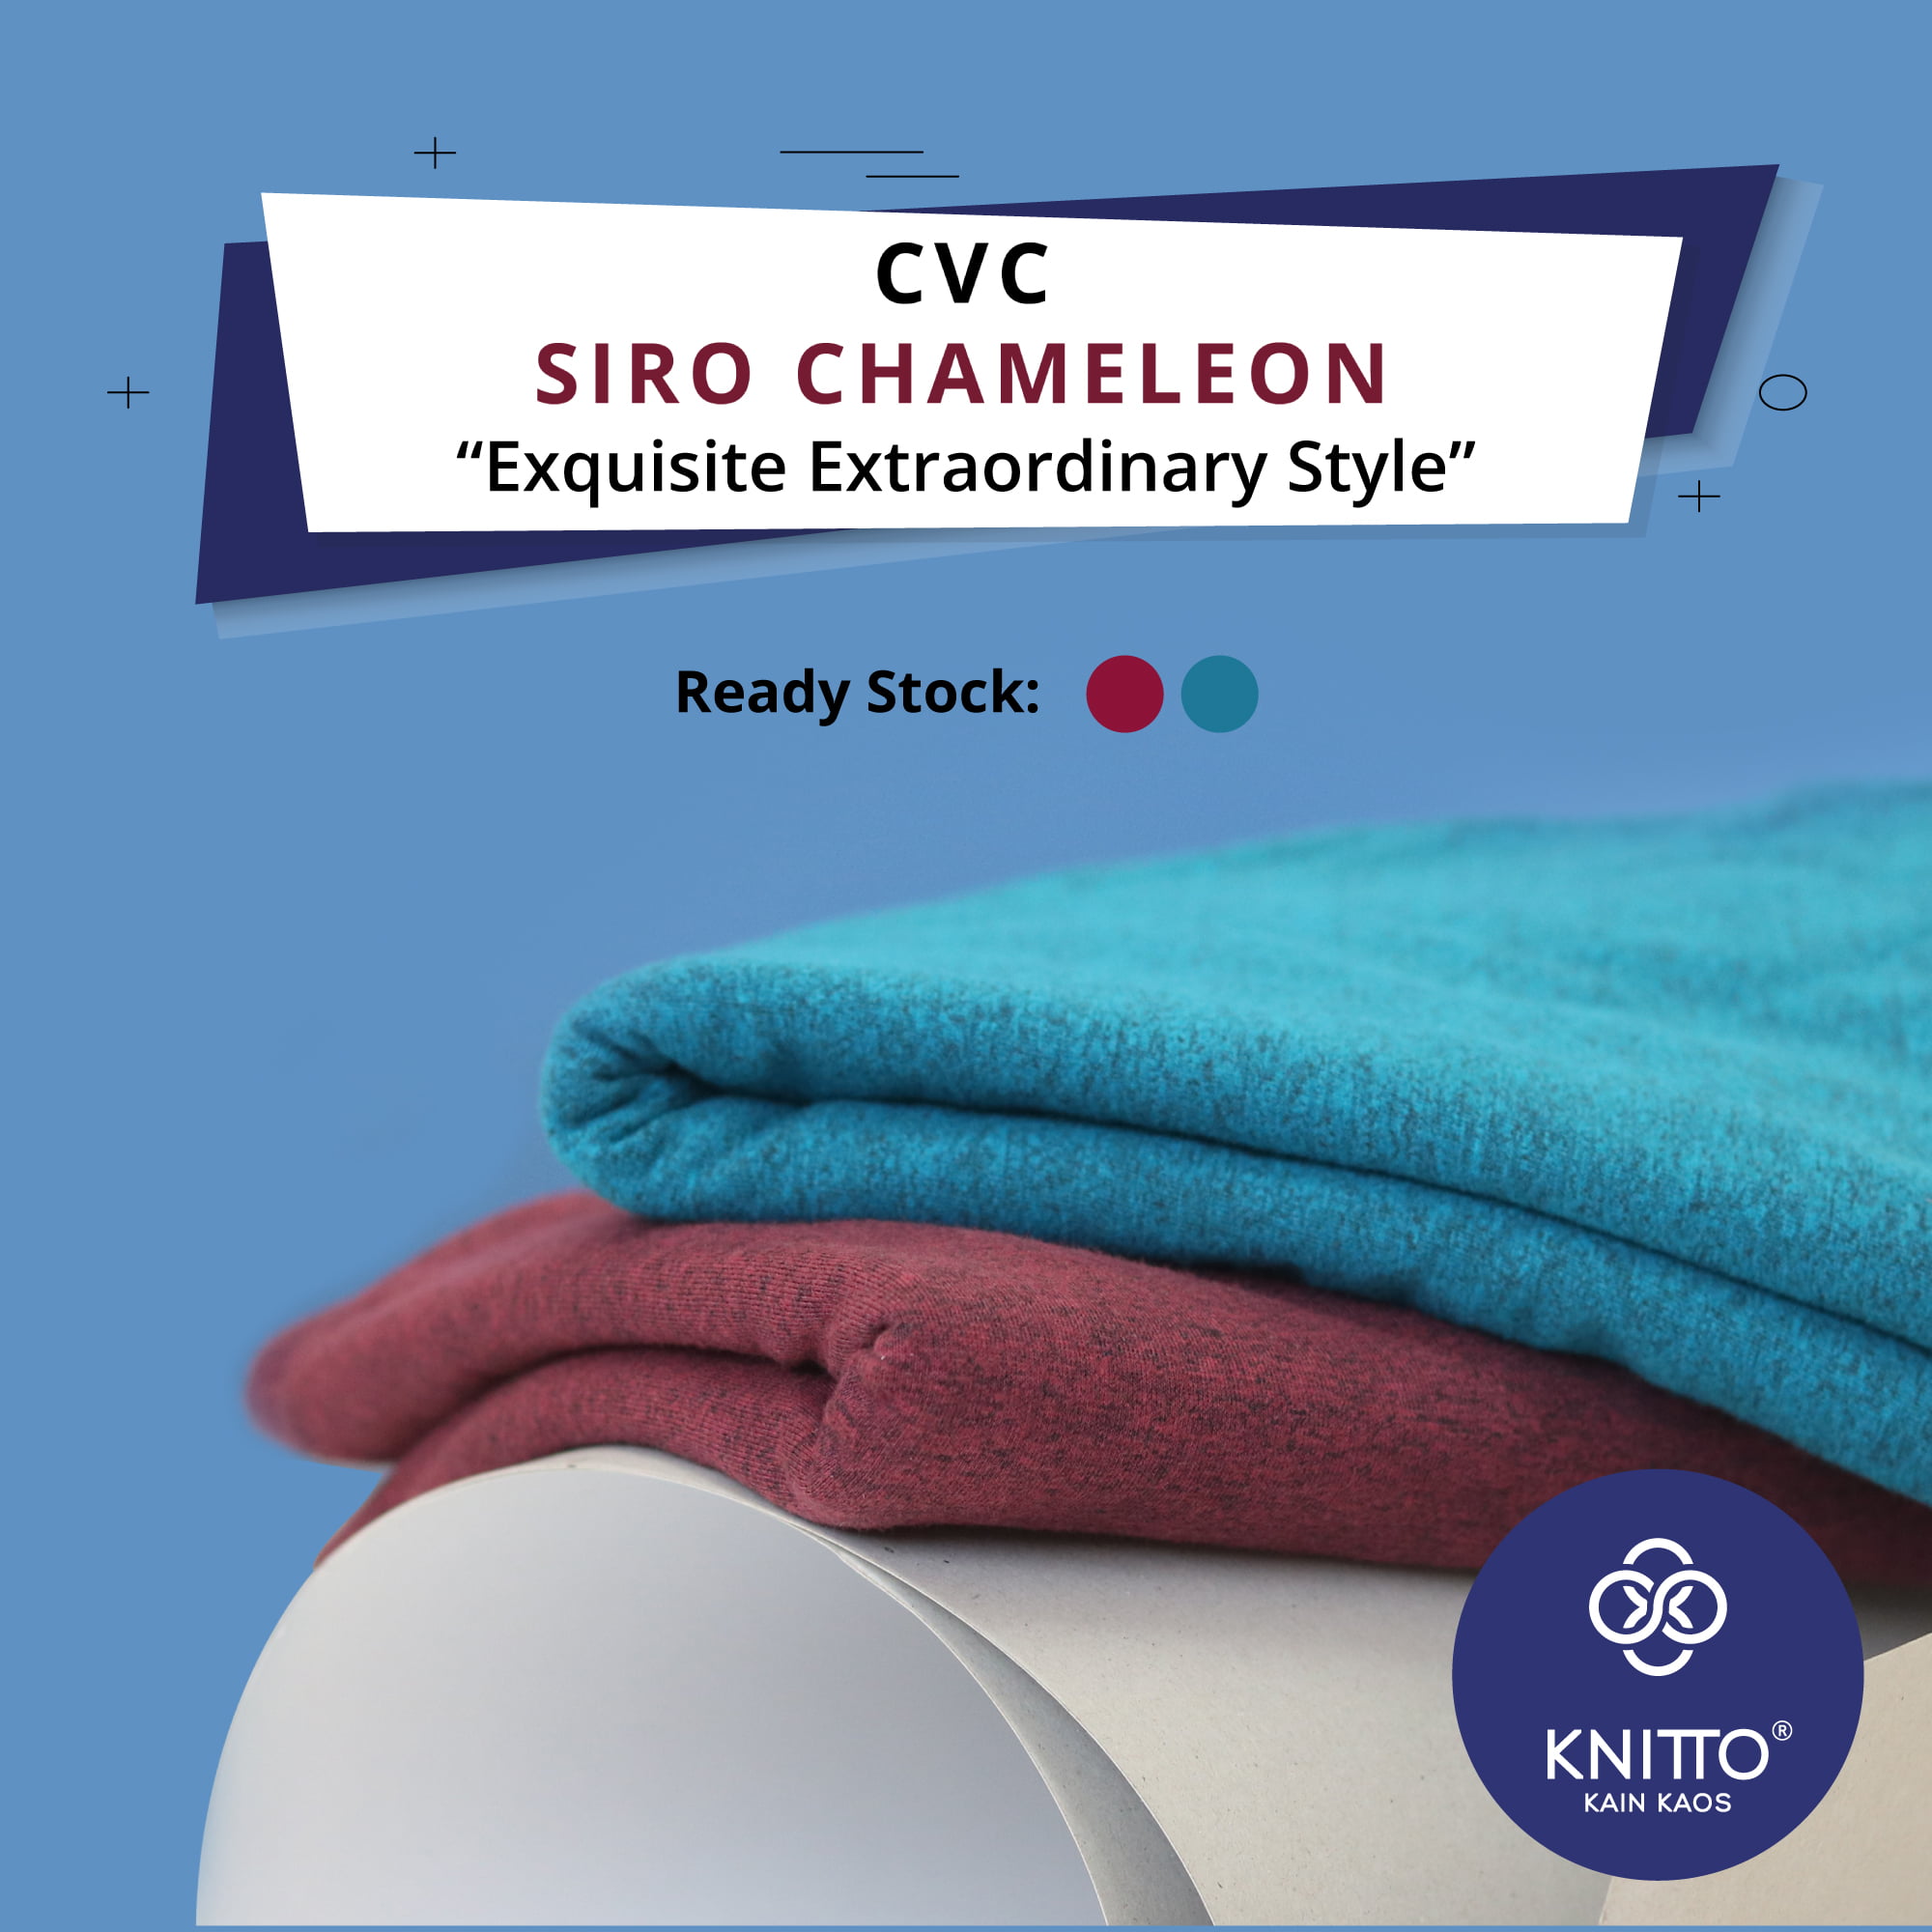 CVC Siro Chameleon